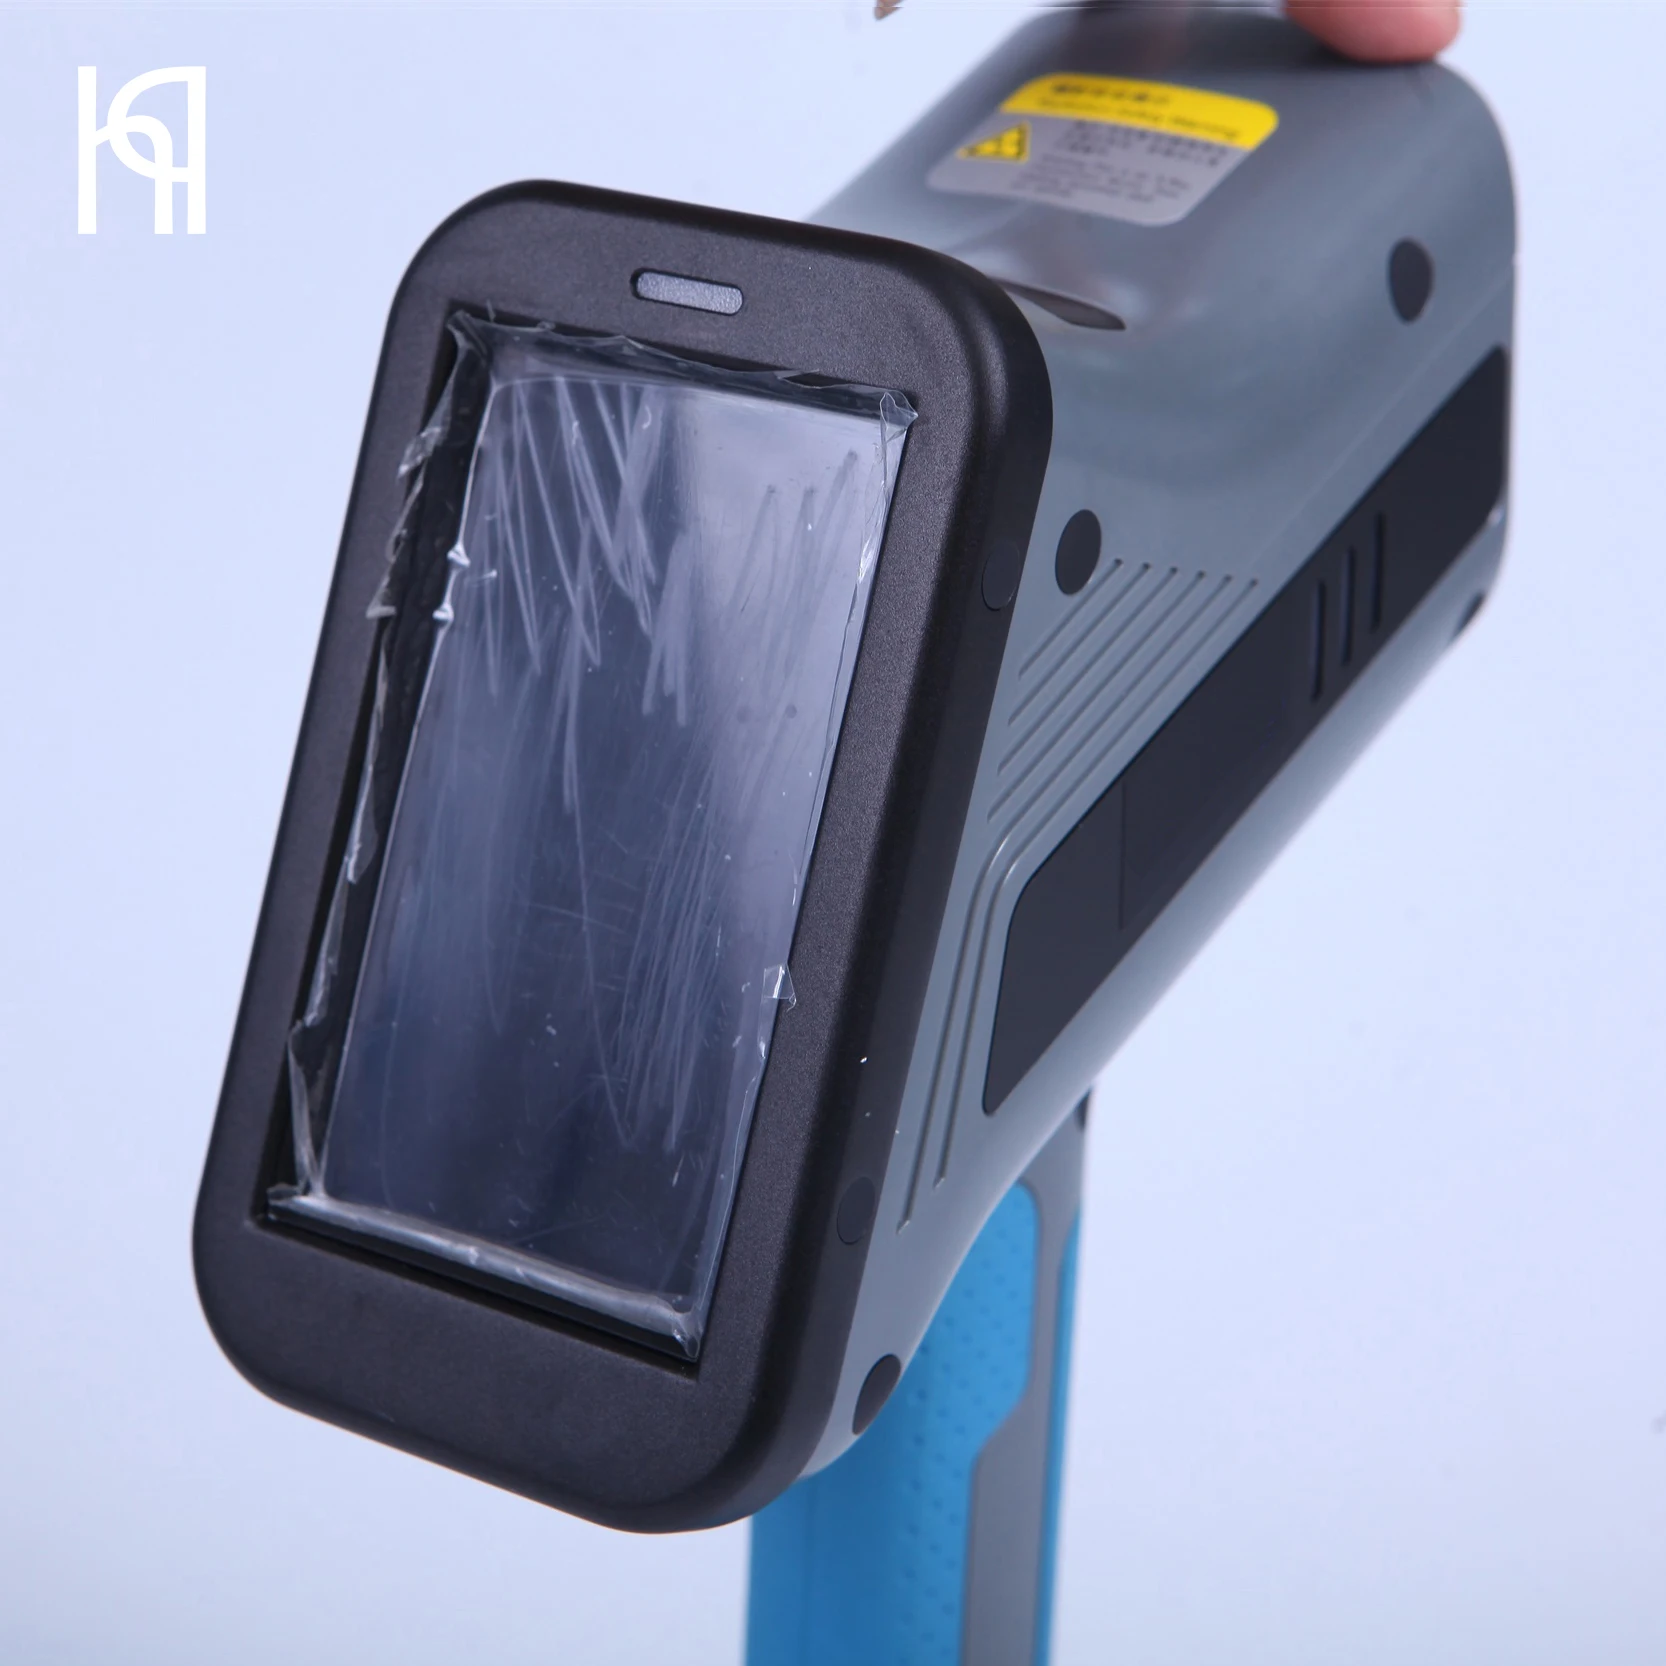 HA 350 handheld xrf spectrometer price xrf spectrometer portable portable xrf analyzer for gold detection